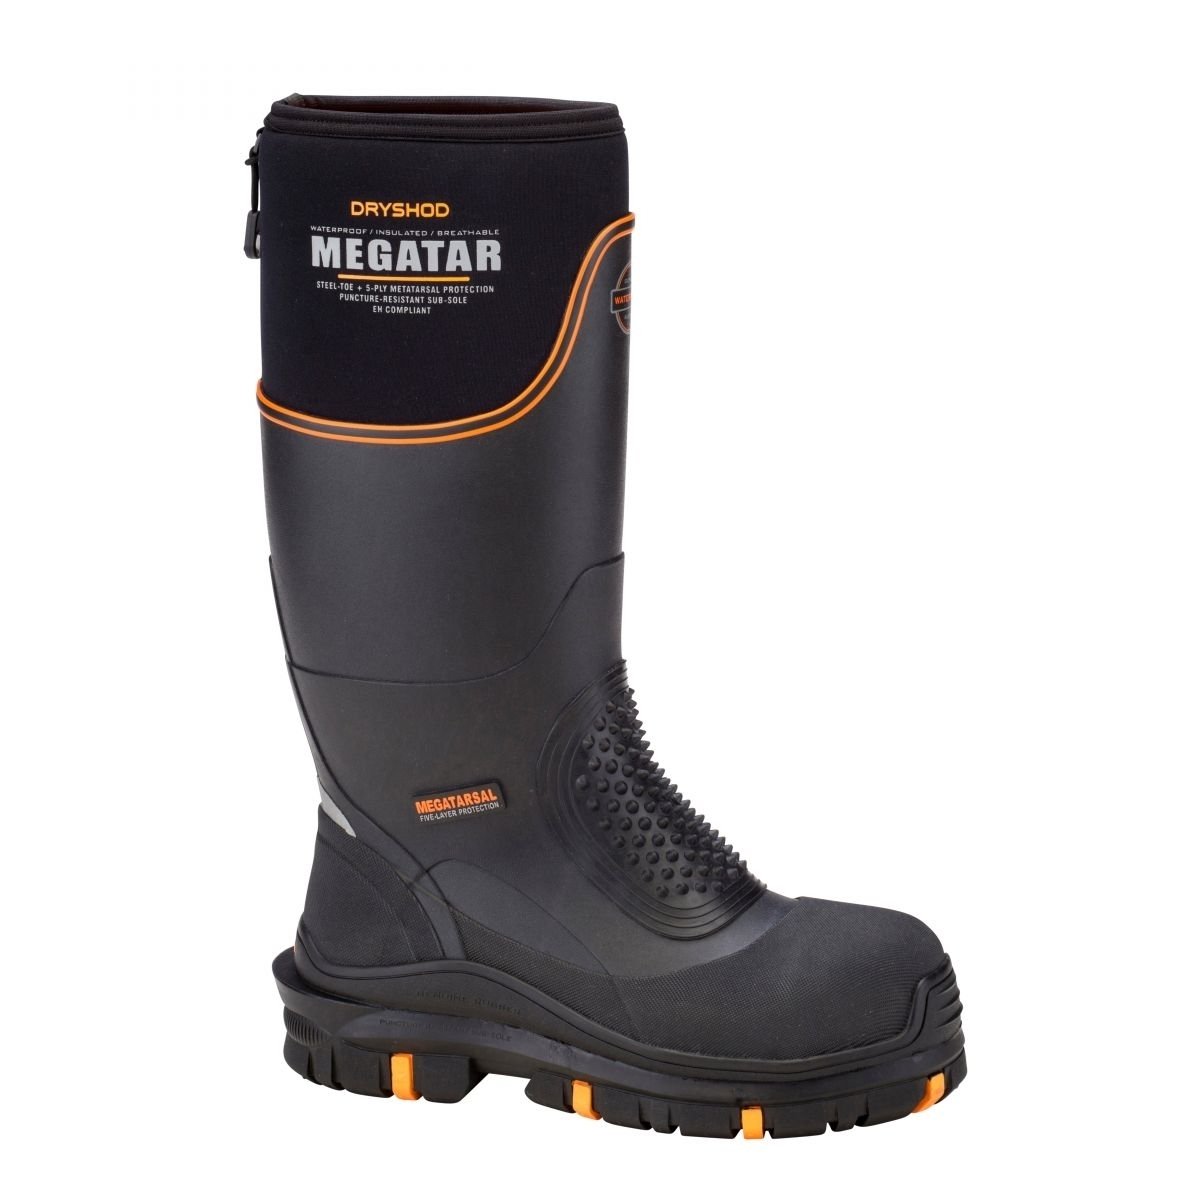 Dryshod Men's Megatar Steel Toe Metatarsal Guard Work Boot Black - MEG-MH-BK ONE SIZE BLACK/ORANGE - BLACK/ORANGE, 12